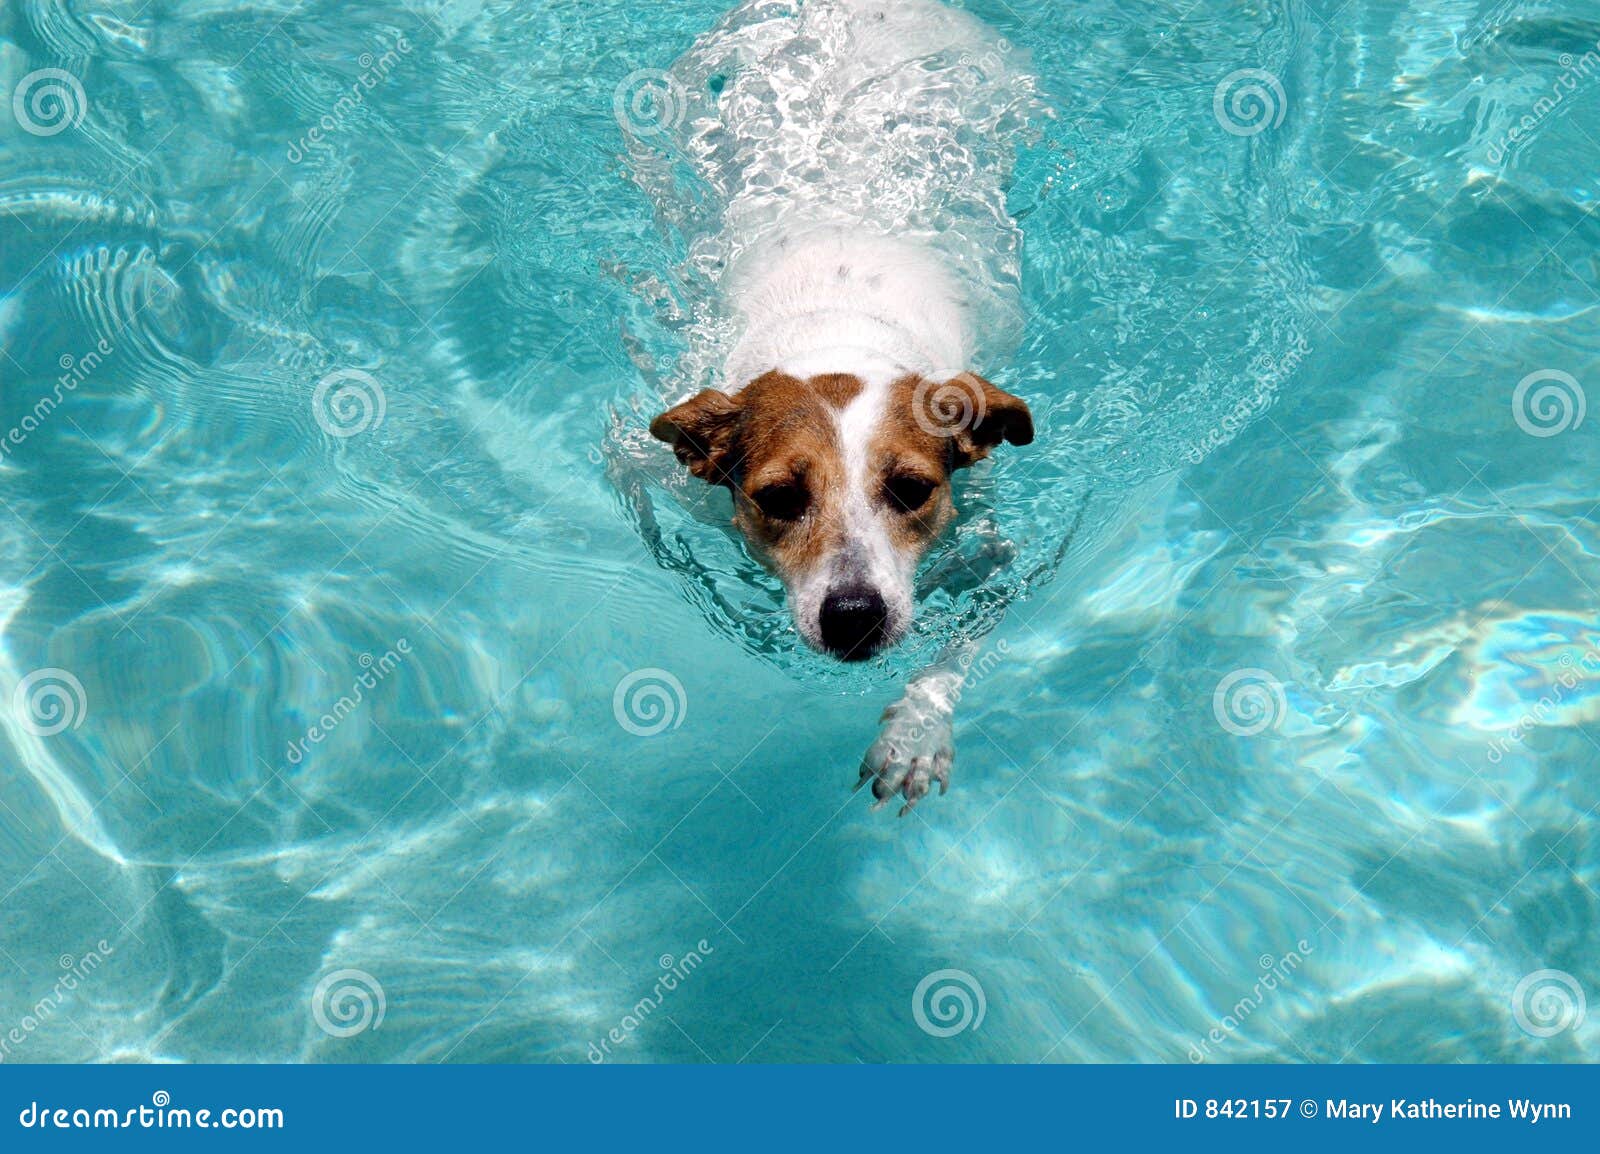 clipart dog swimming - photo #19